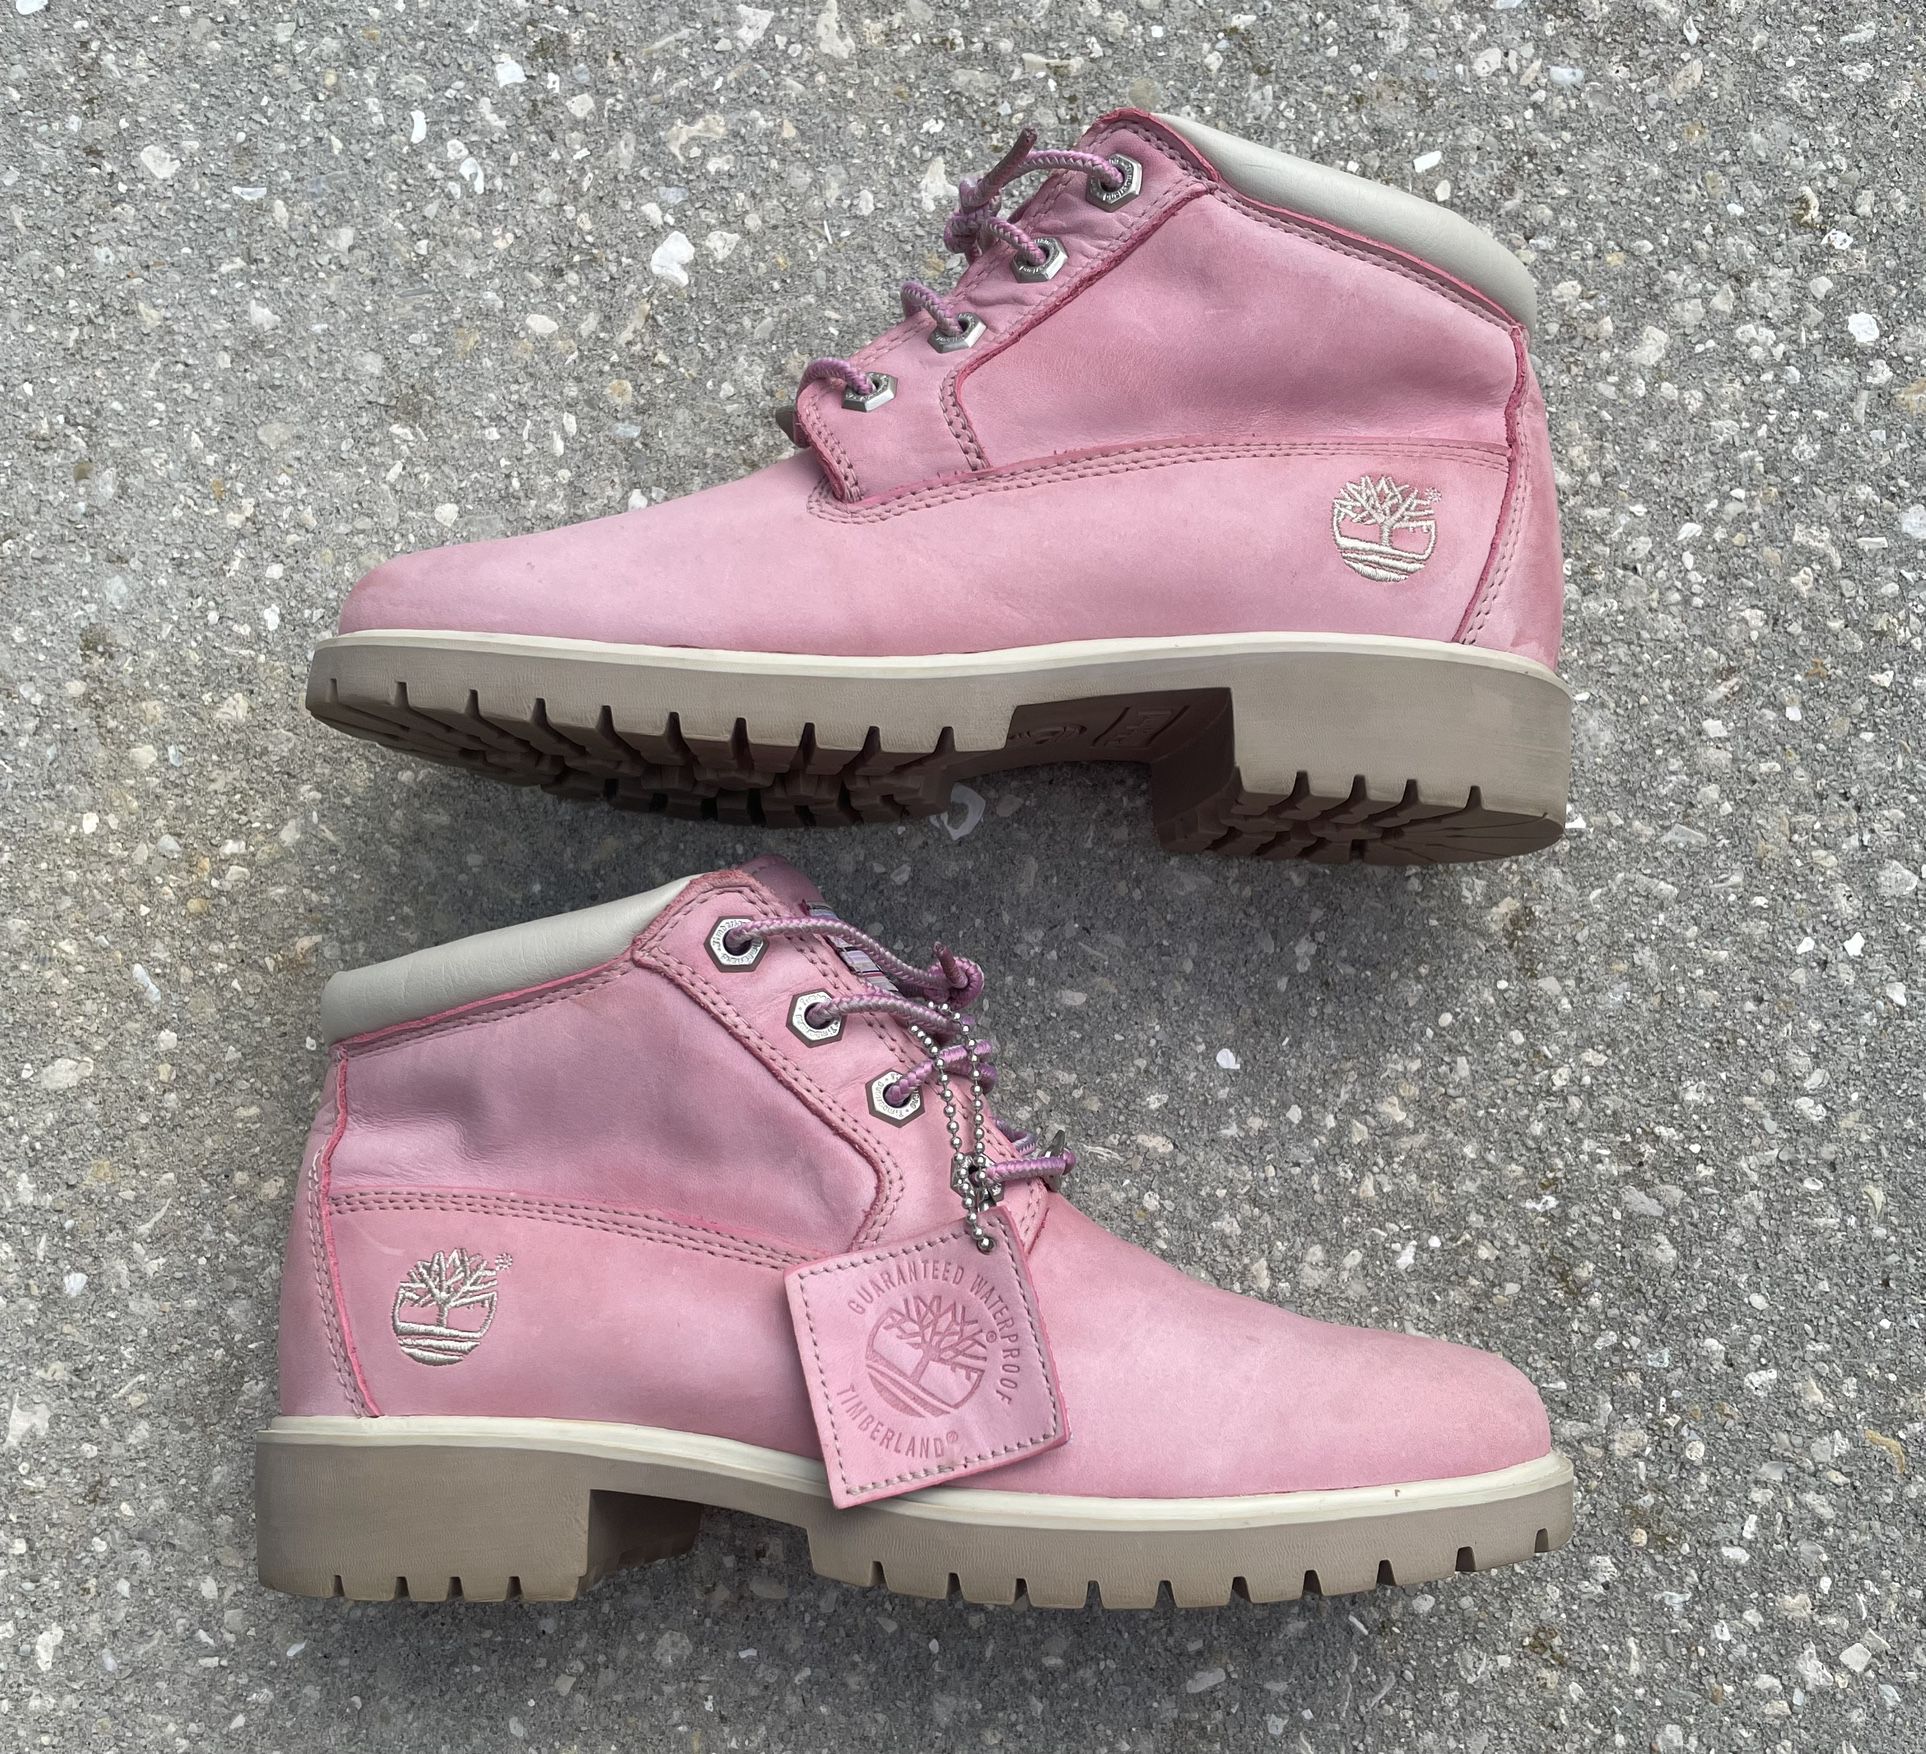 Timberland Women’s Waterproof Nellie Chukka Boot Light Pink Size 7.0 No Box Used